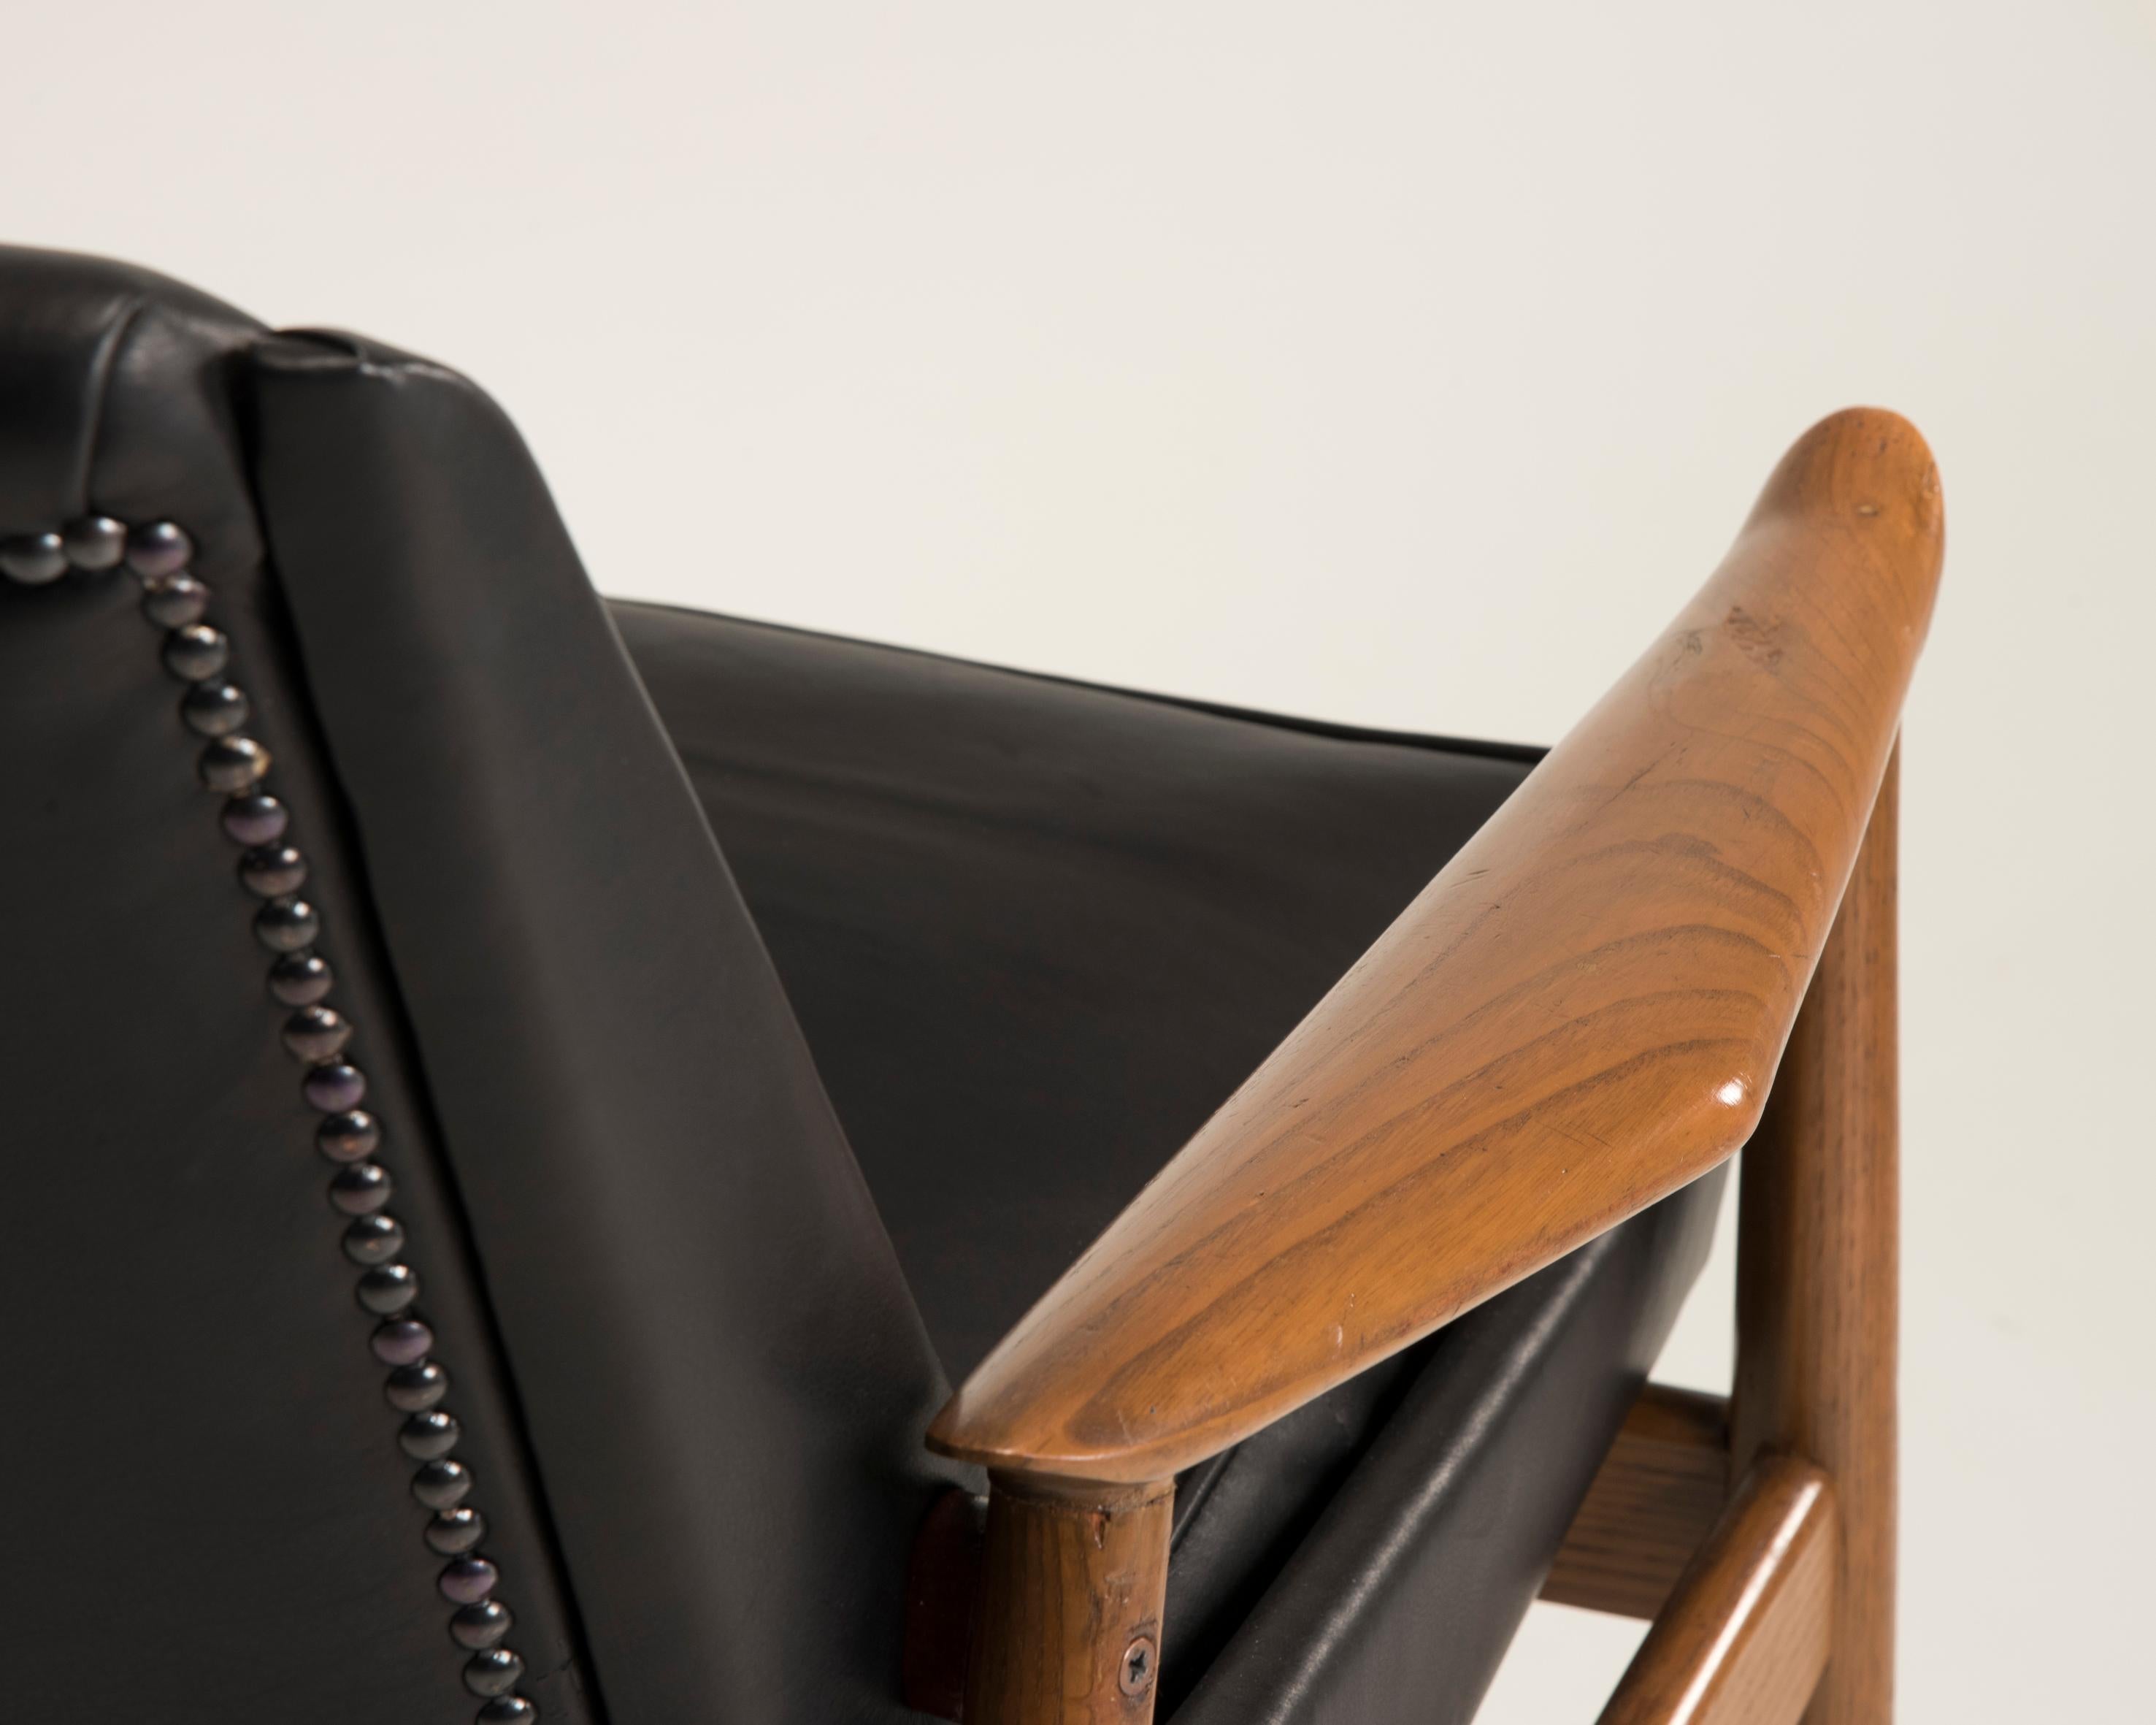 20th Century Italian Black Leather Walnut Wood Armchair, by Pizzetti 1950s For Sale